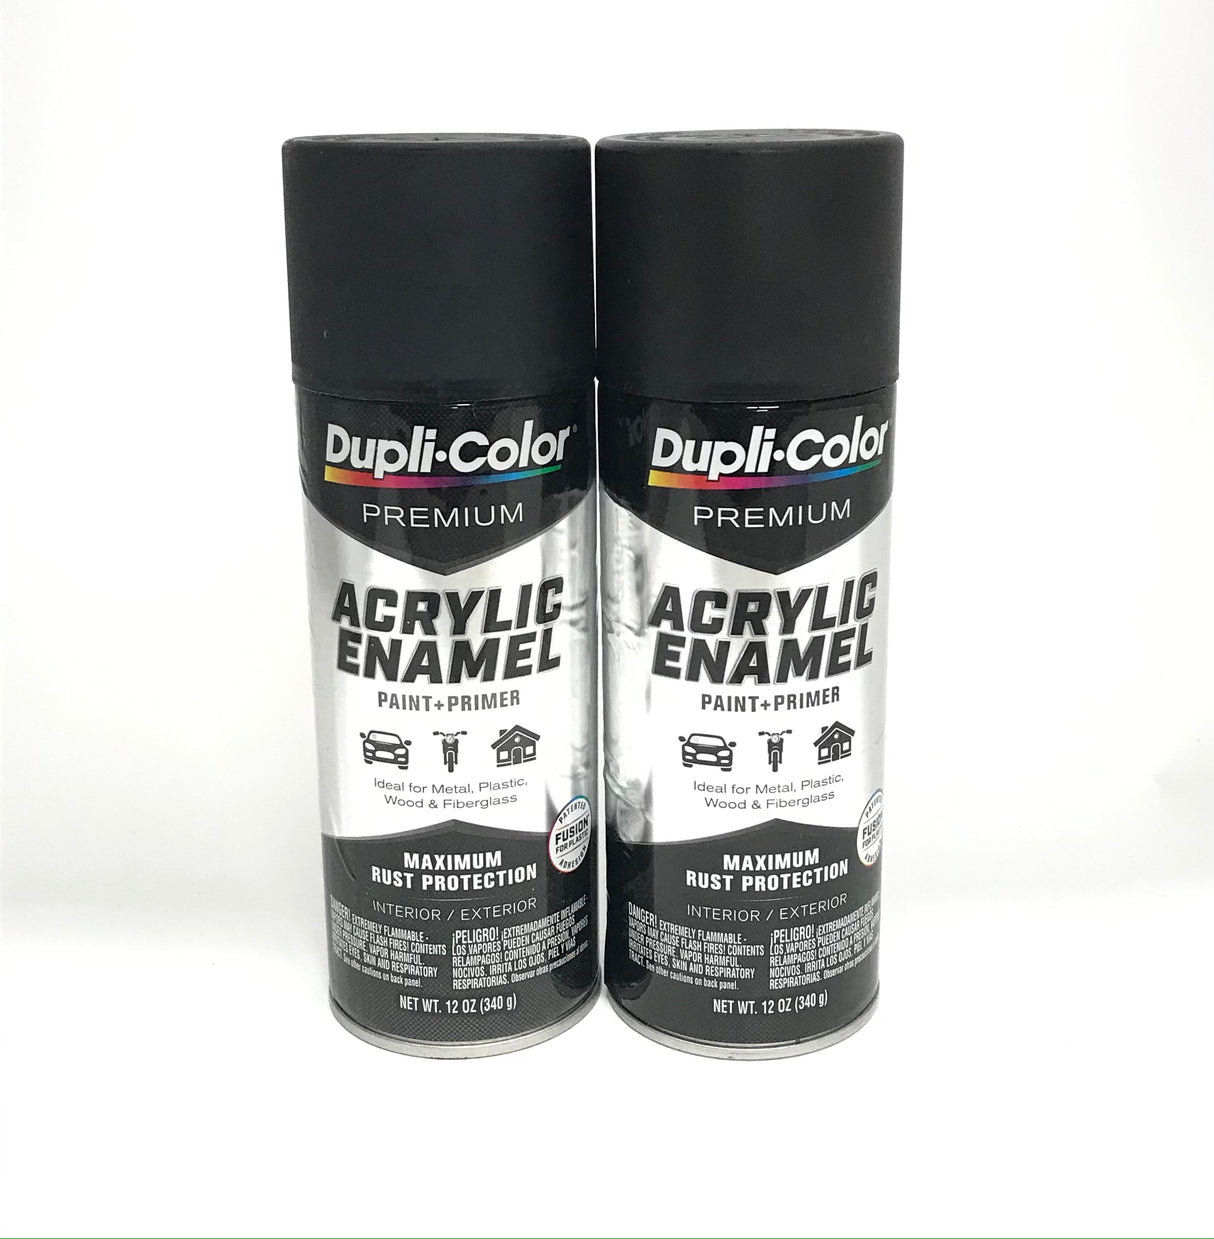 Duplicolor PAE101-2 PACK SEMI-GLOSS BLACK Premium Acrylic Enamel - Max Rust Protection - 12oz